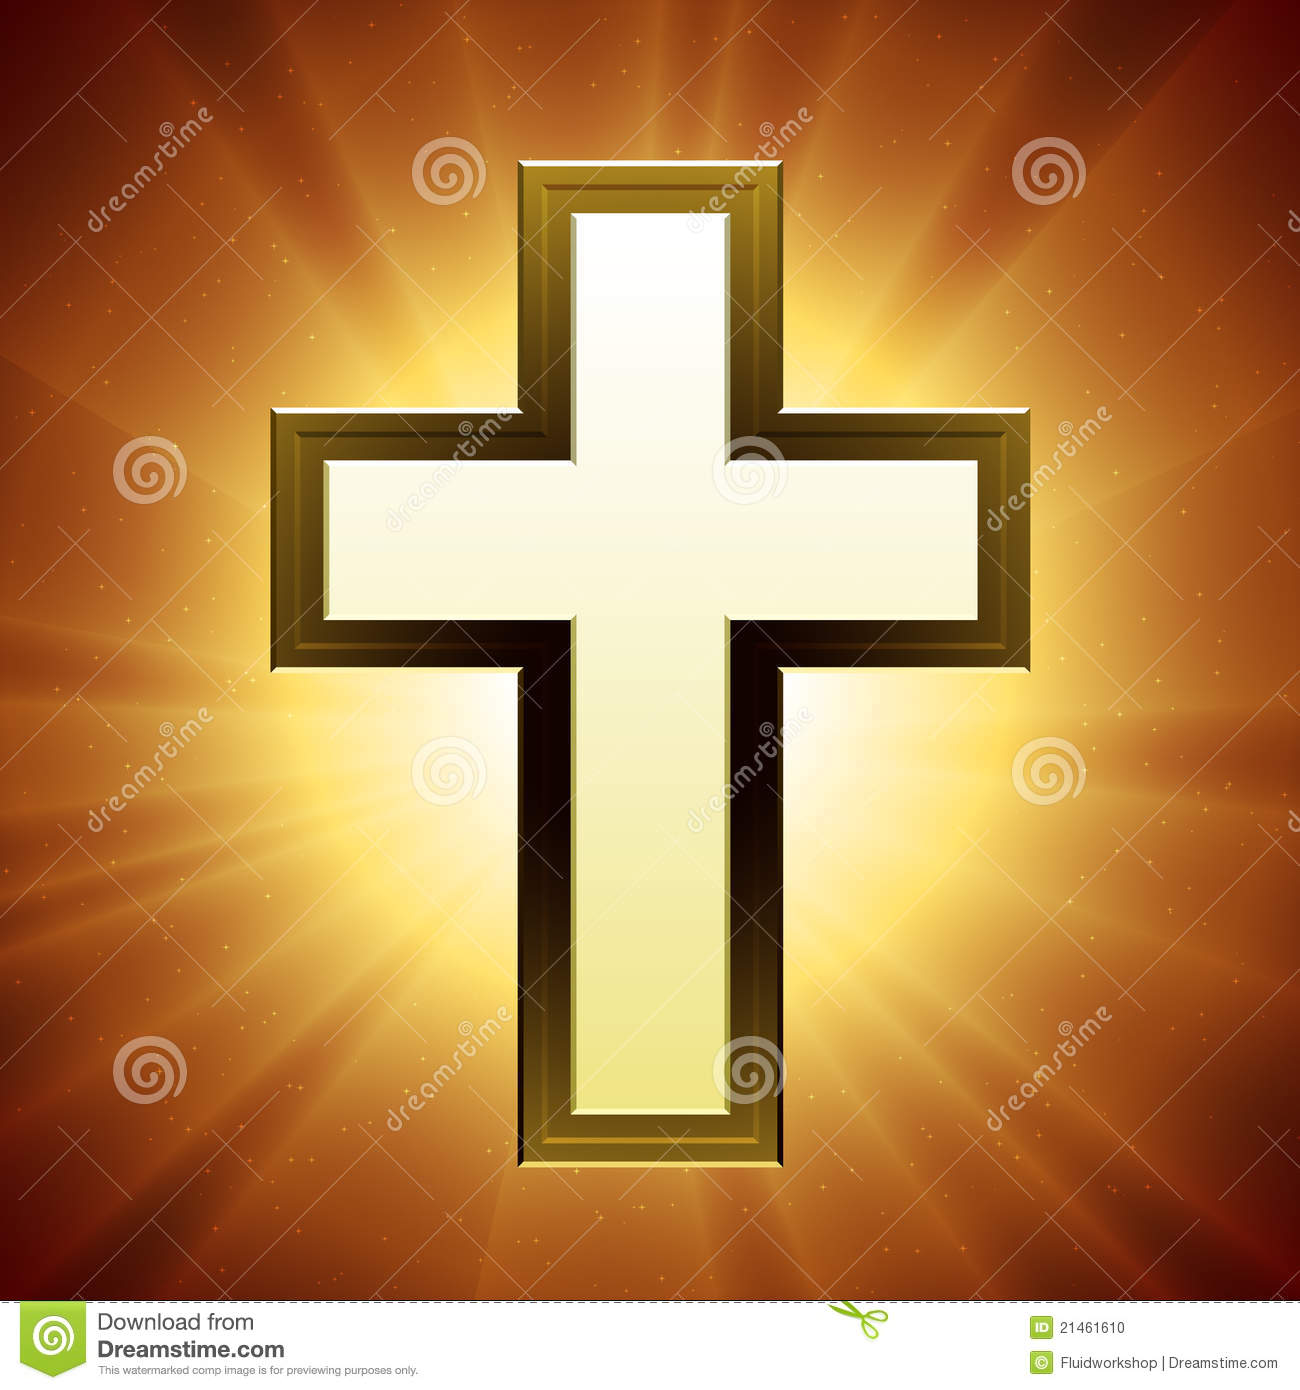 Free Christian Cross Vector